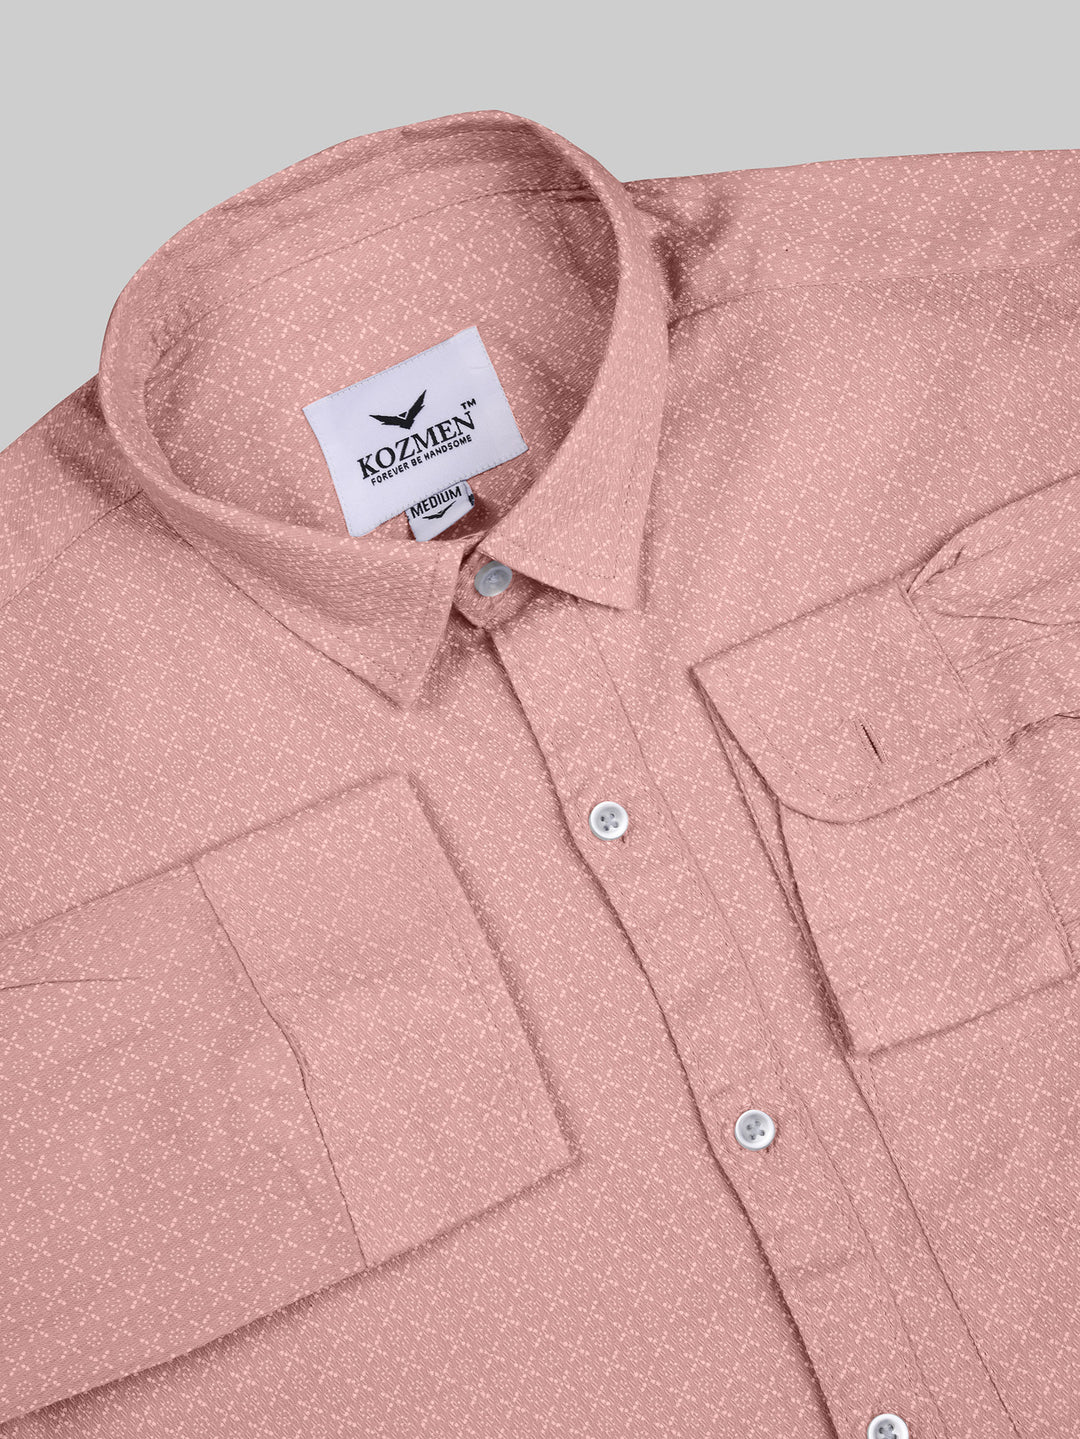 Flamingo Pink with White Micro Dot Print Cotton Shirt